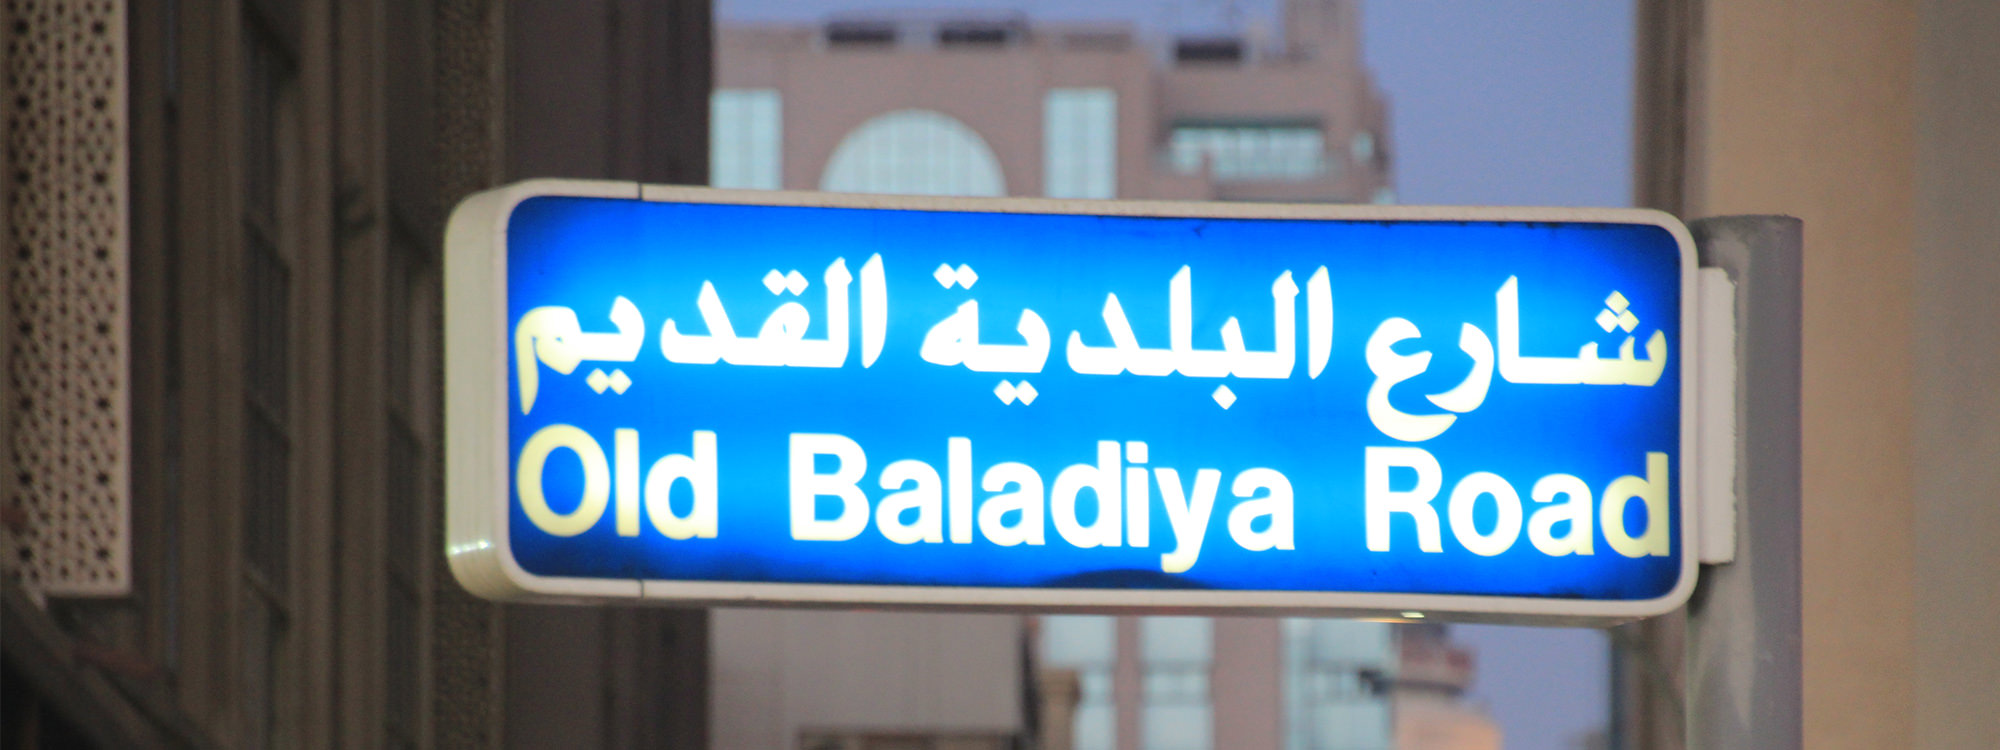 Straßenschild der Old Baladiya Road in Dubai